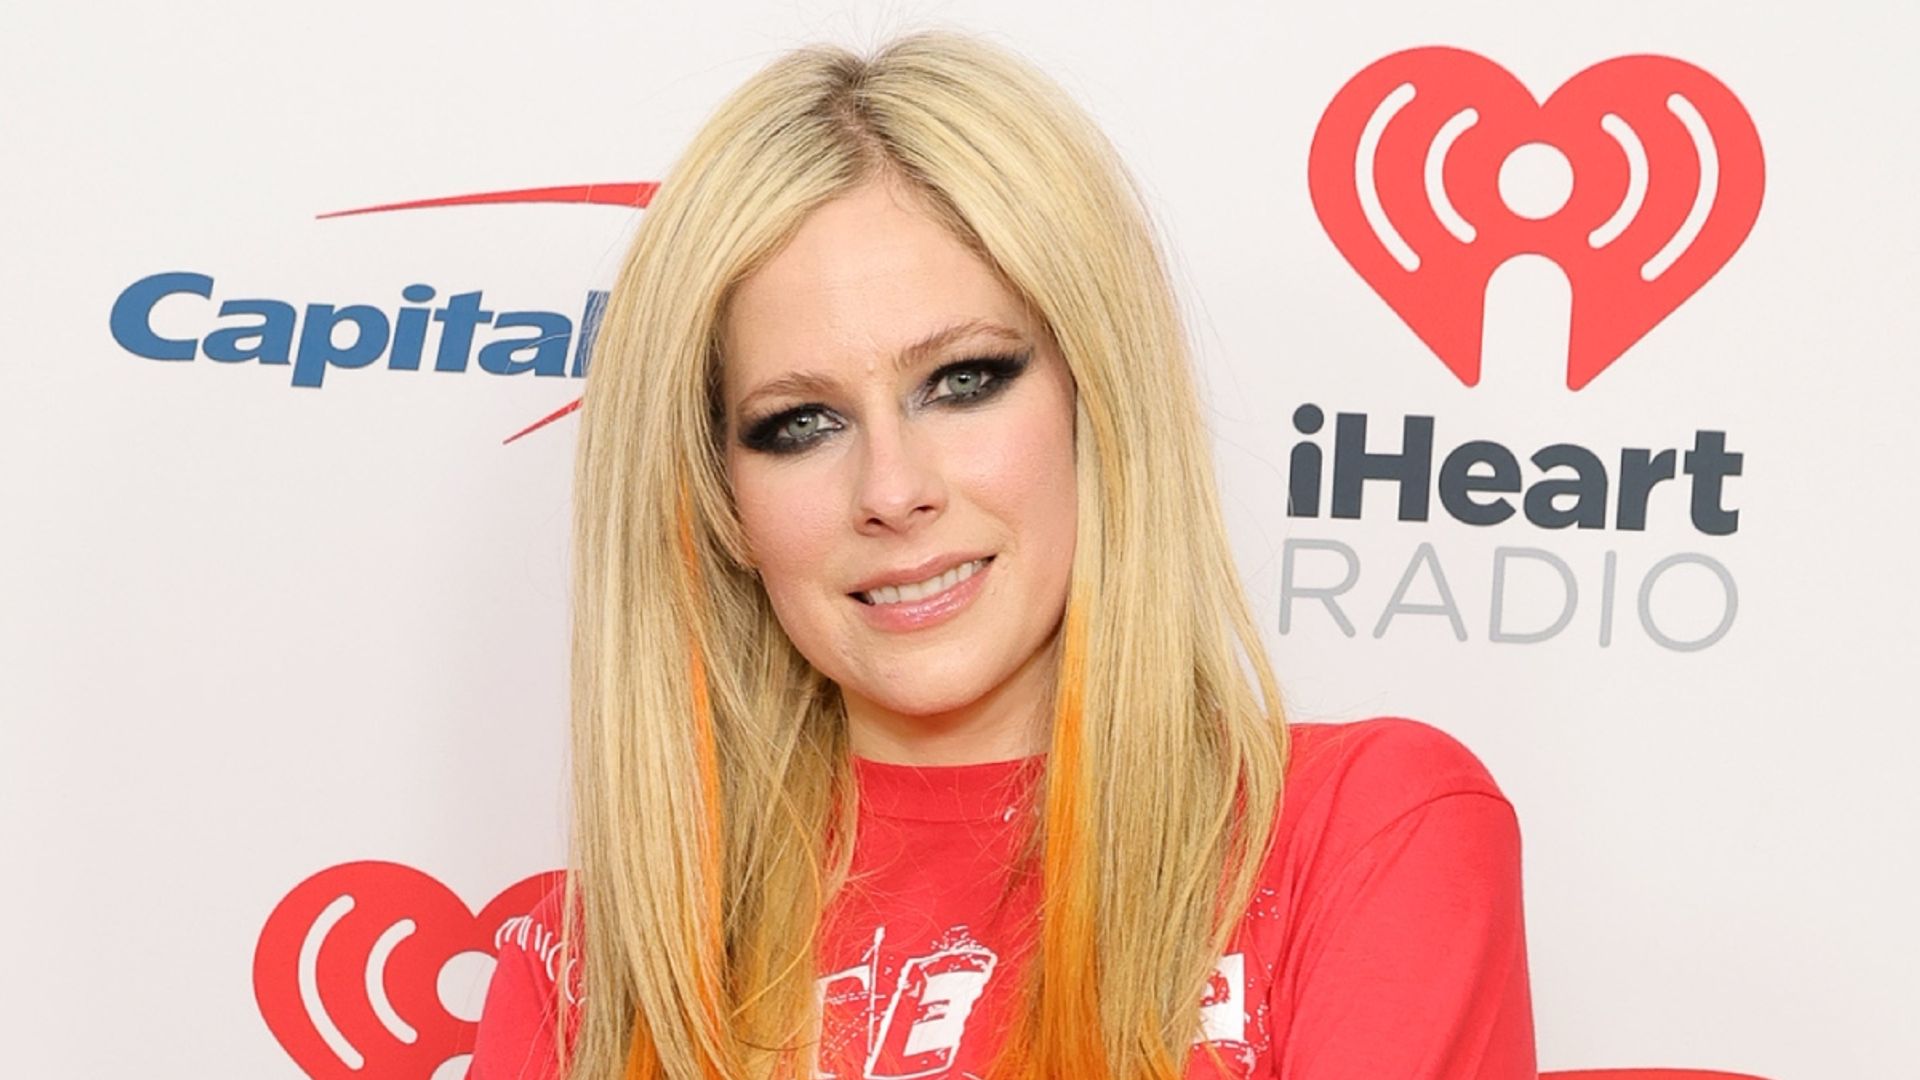 Avril Lavigne begins major countdown as she shares unreleased music teaser